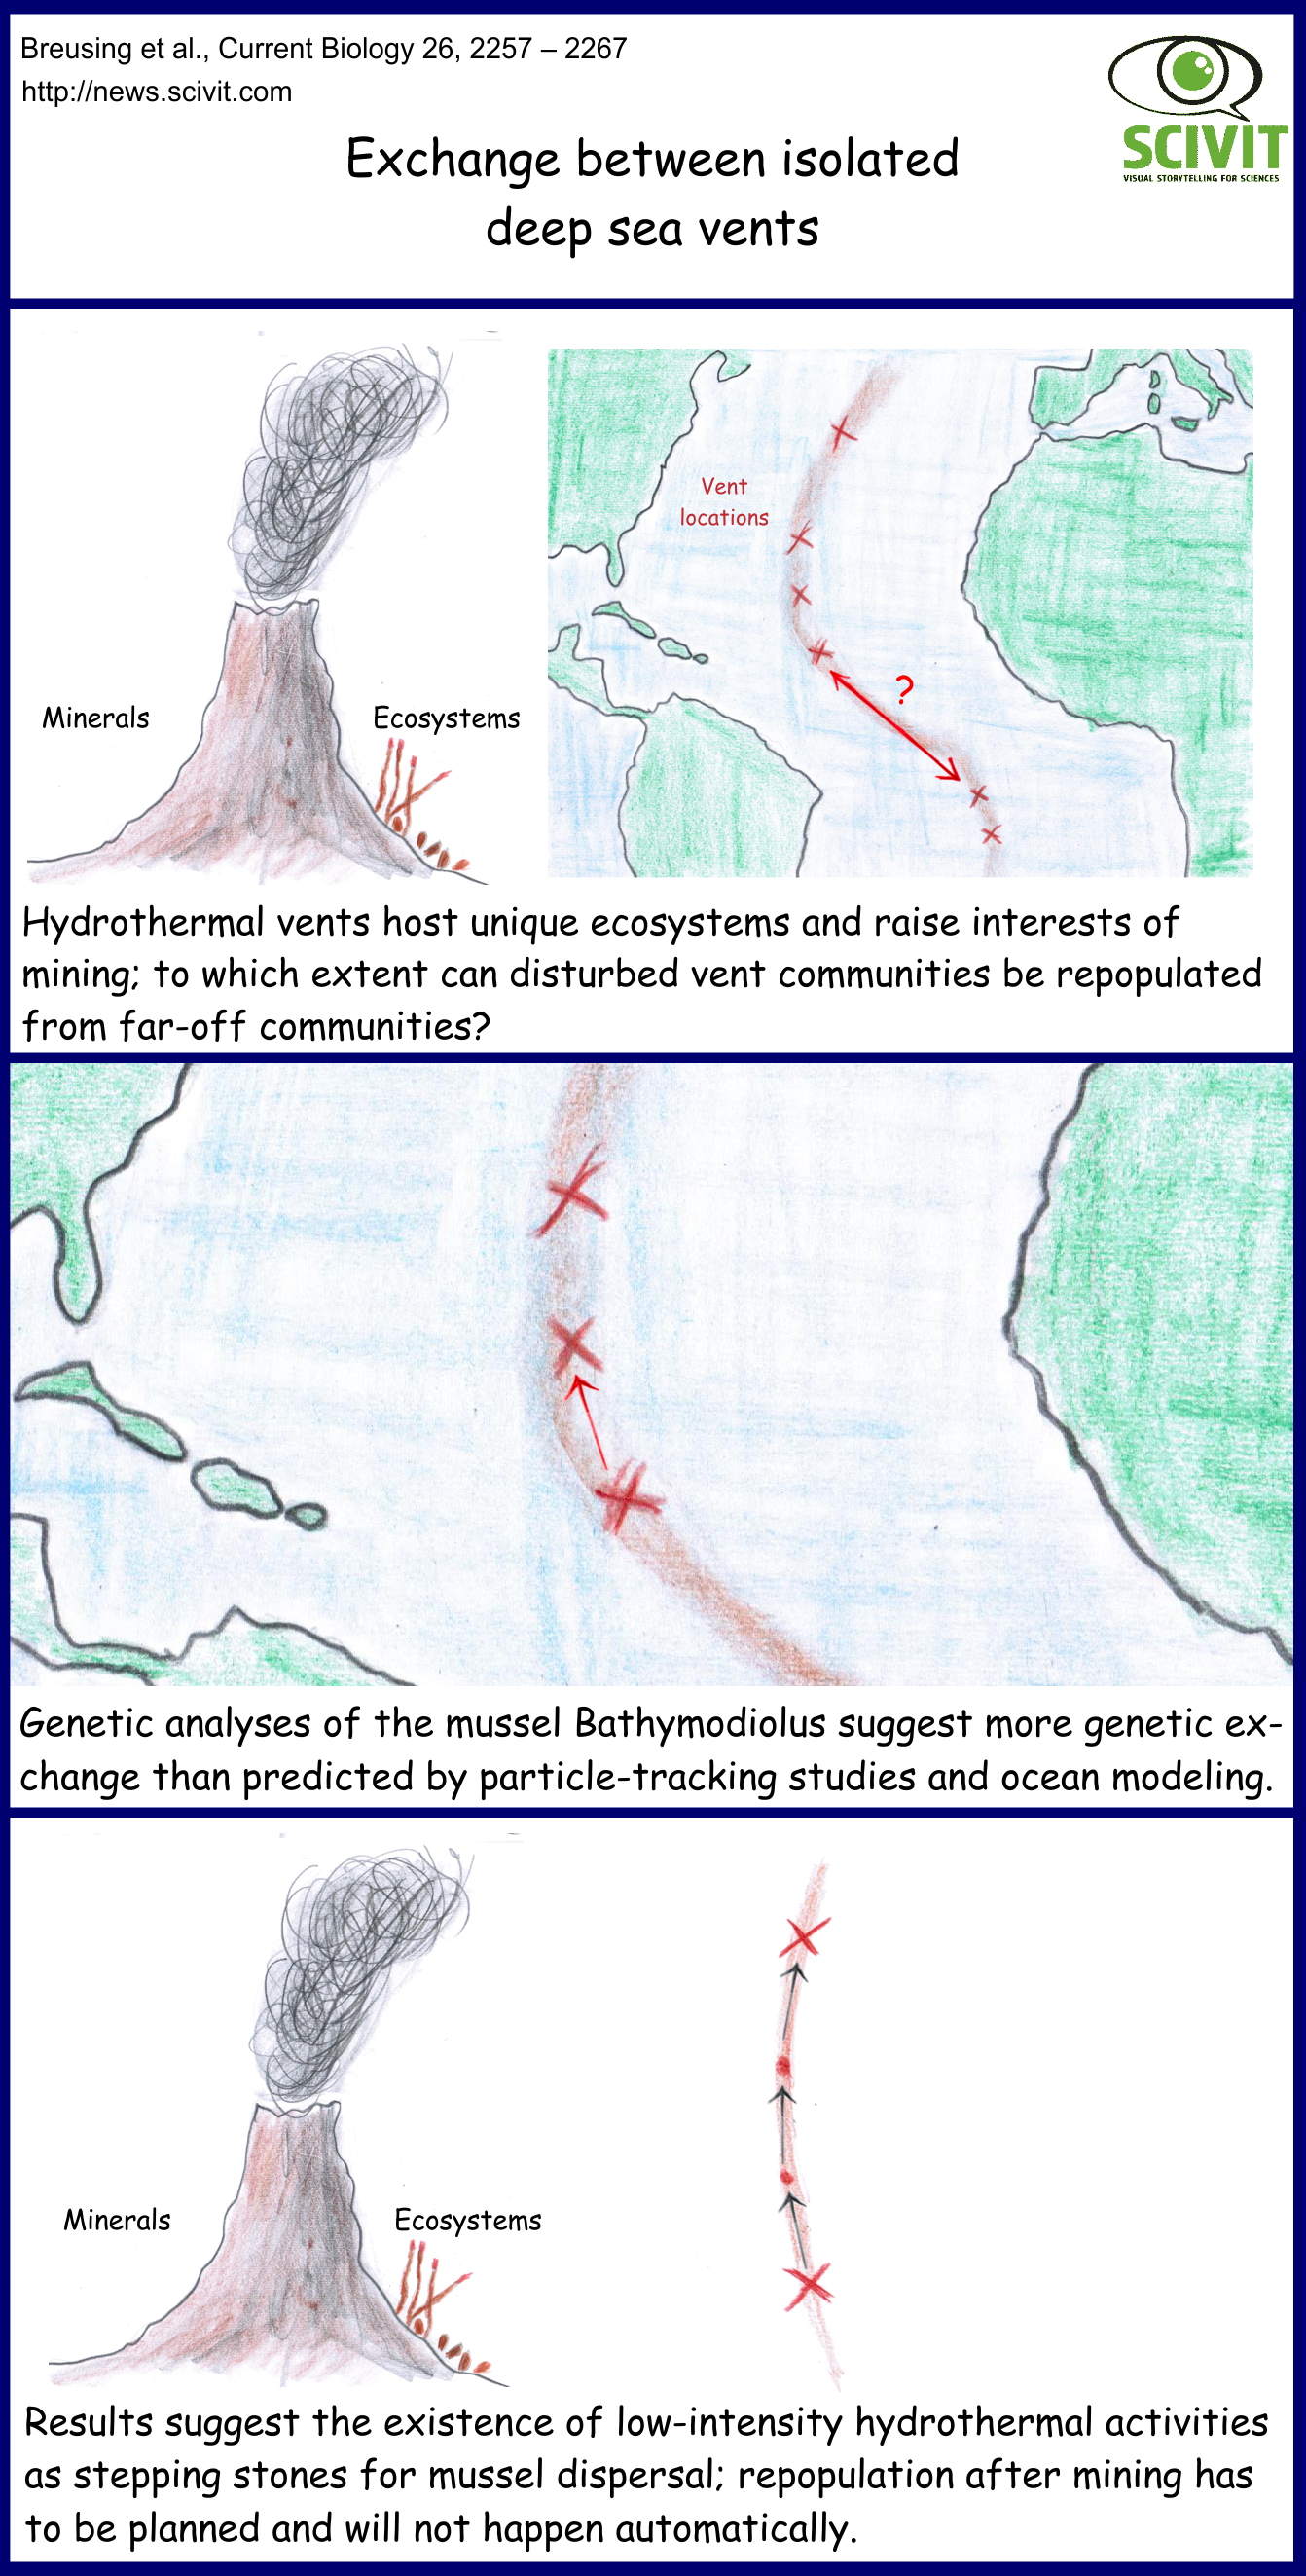  Exchange between isolated deep sea vents